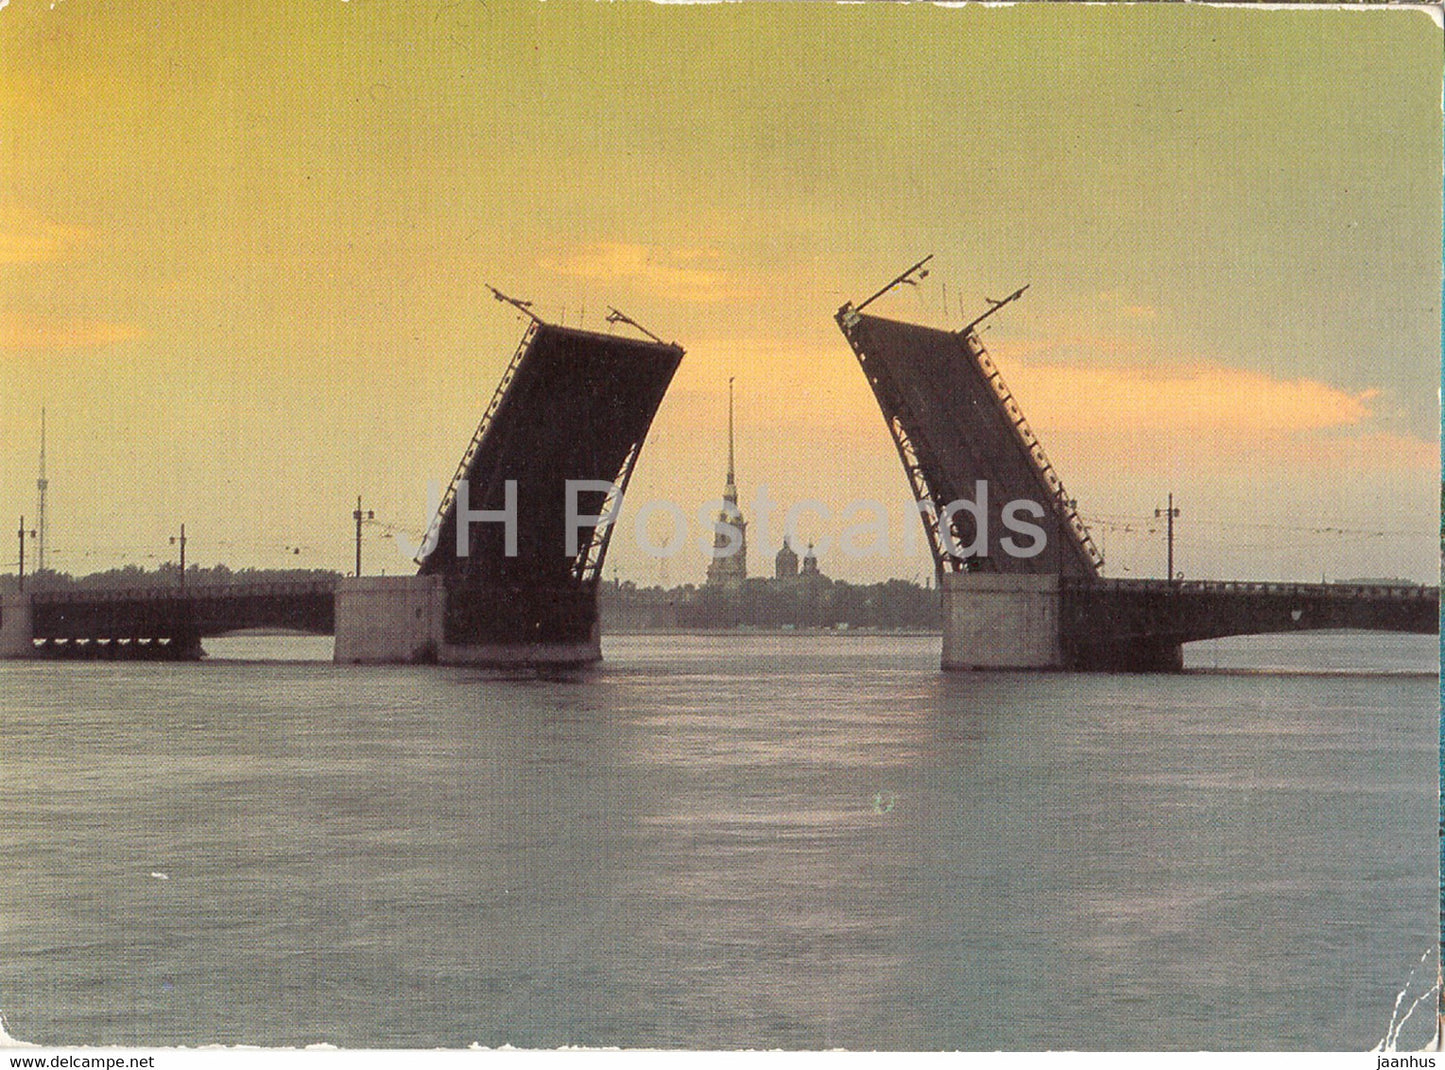 Leningrad - St Petersburg - The Neva during a white Night - Aeroflot - 1990 - Russia USSR - used - JH Postcards